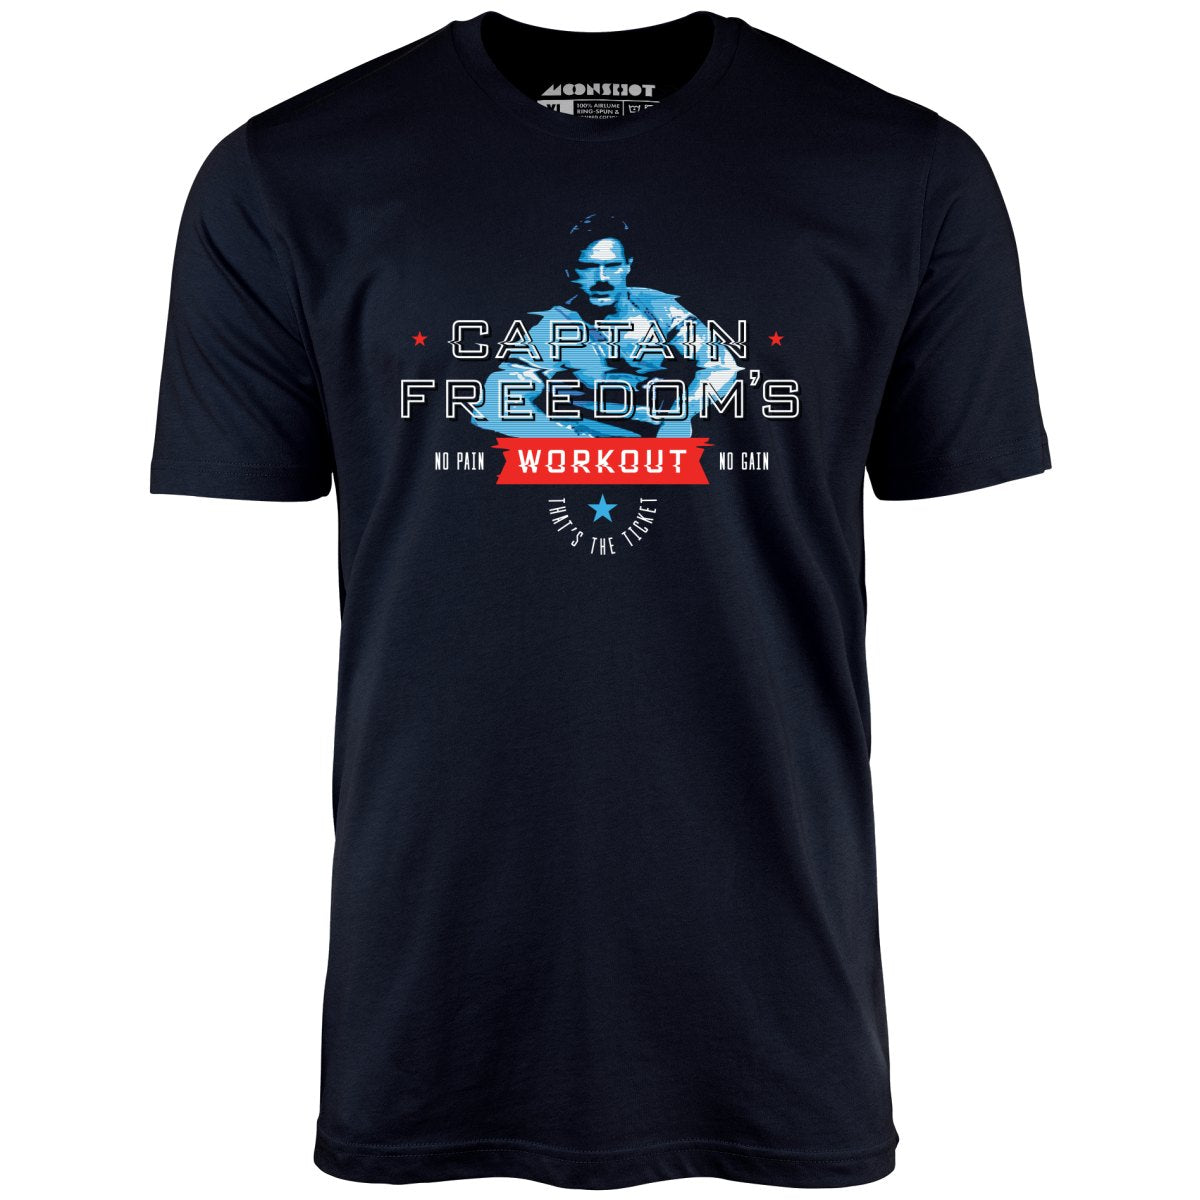 Running Man - Captain Freedom's Workout - Unisex T-Shirt